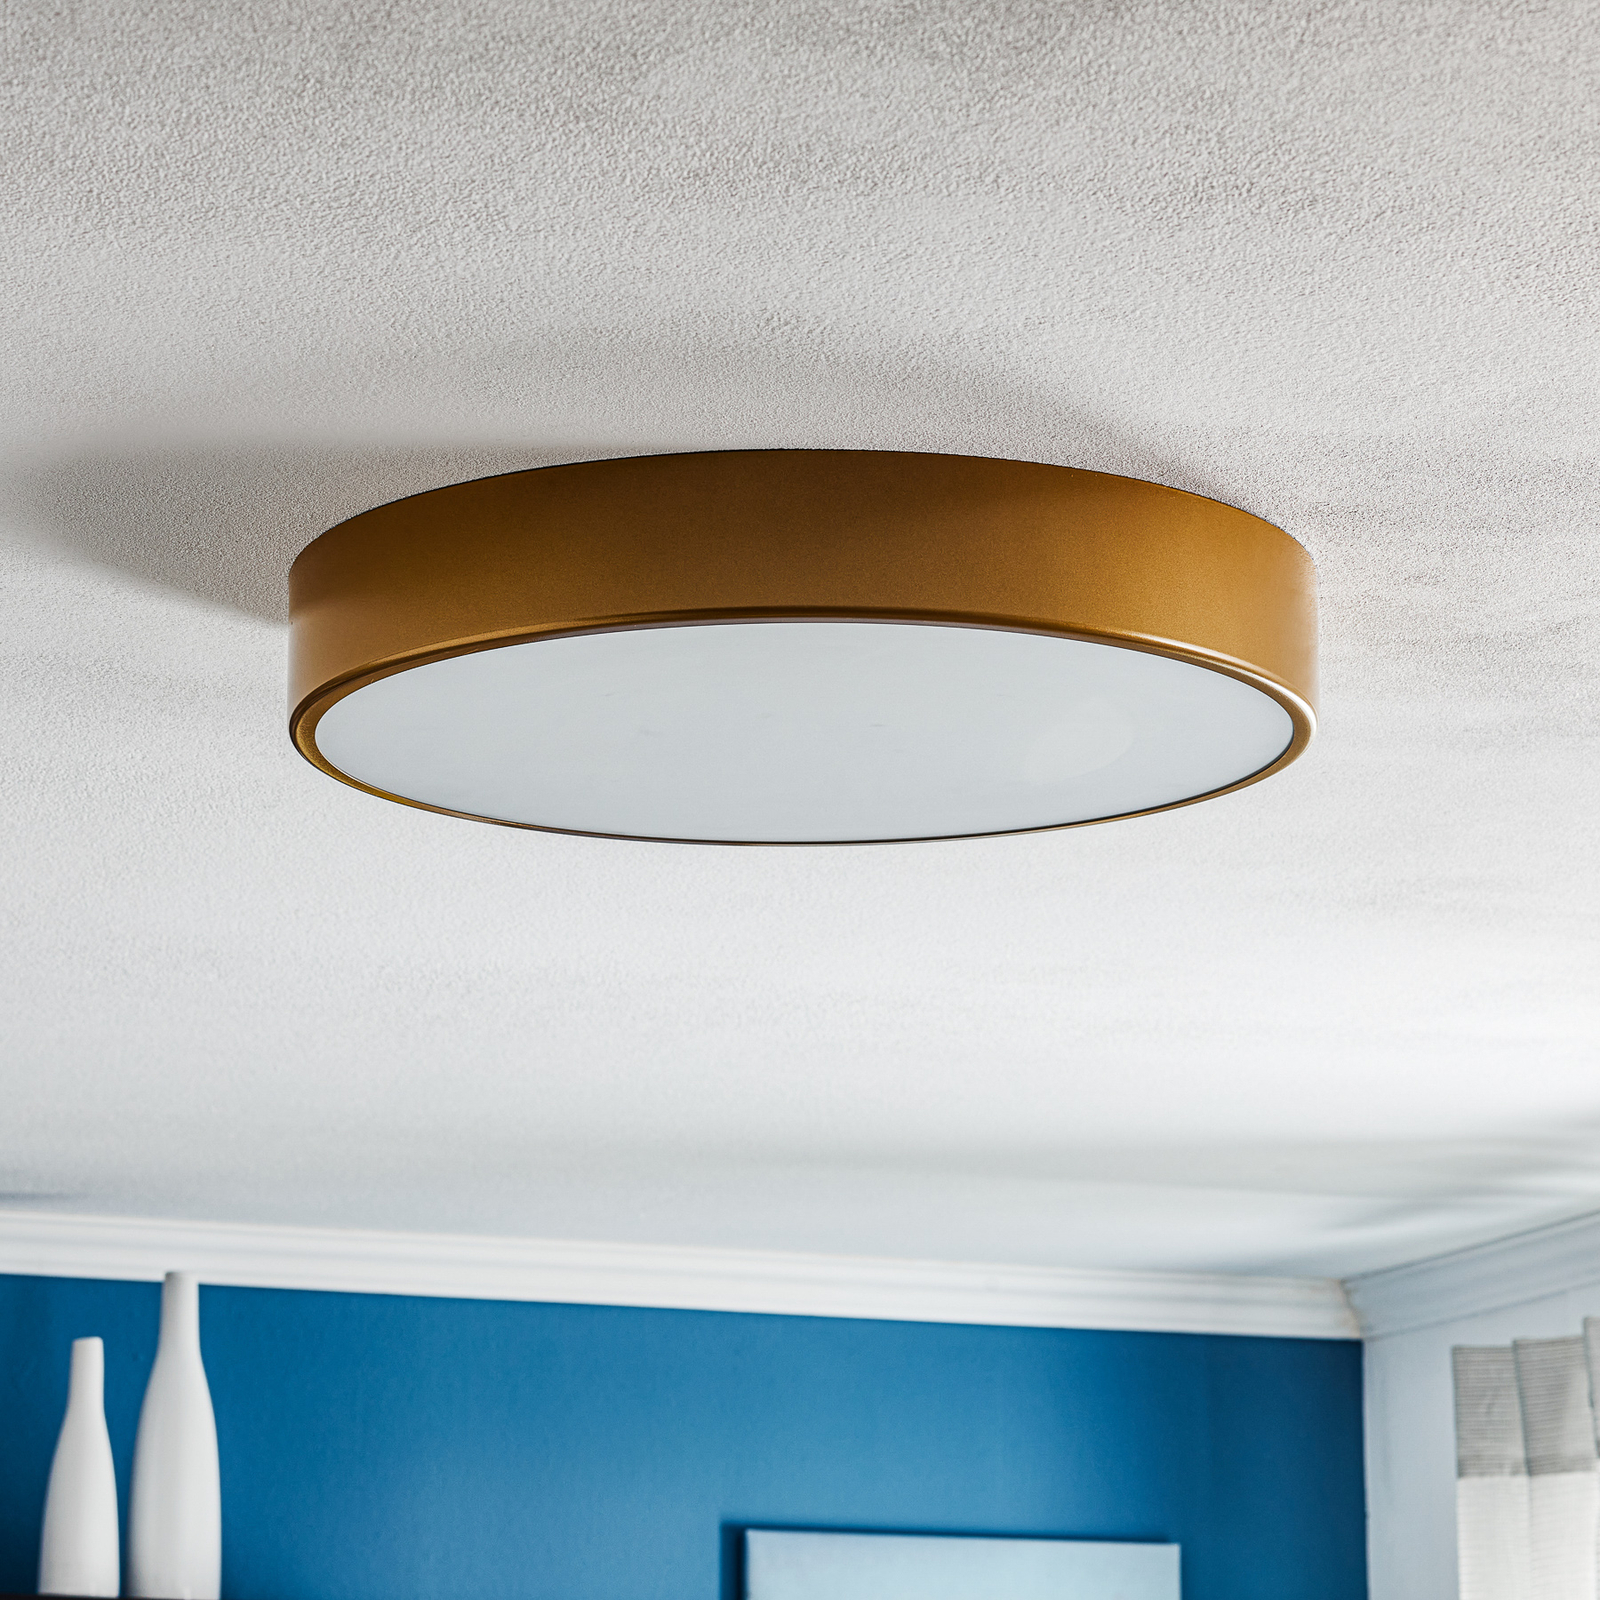 Cleo 500 ceiling light, sensor, Ø 50 cm gold